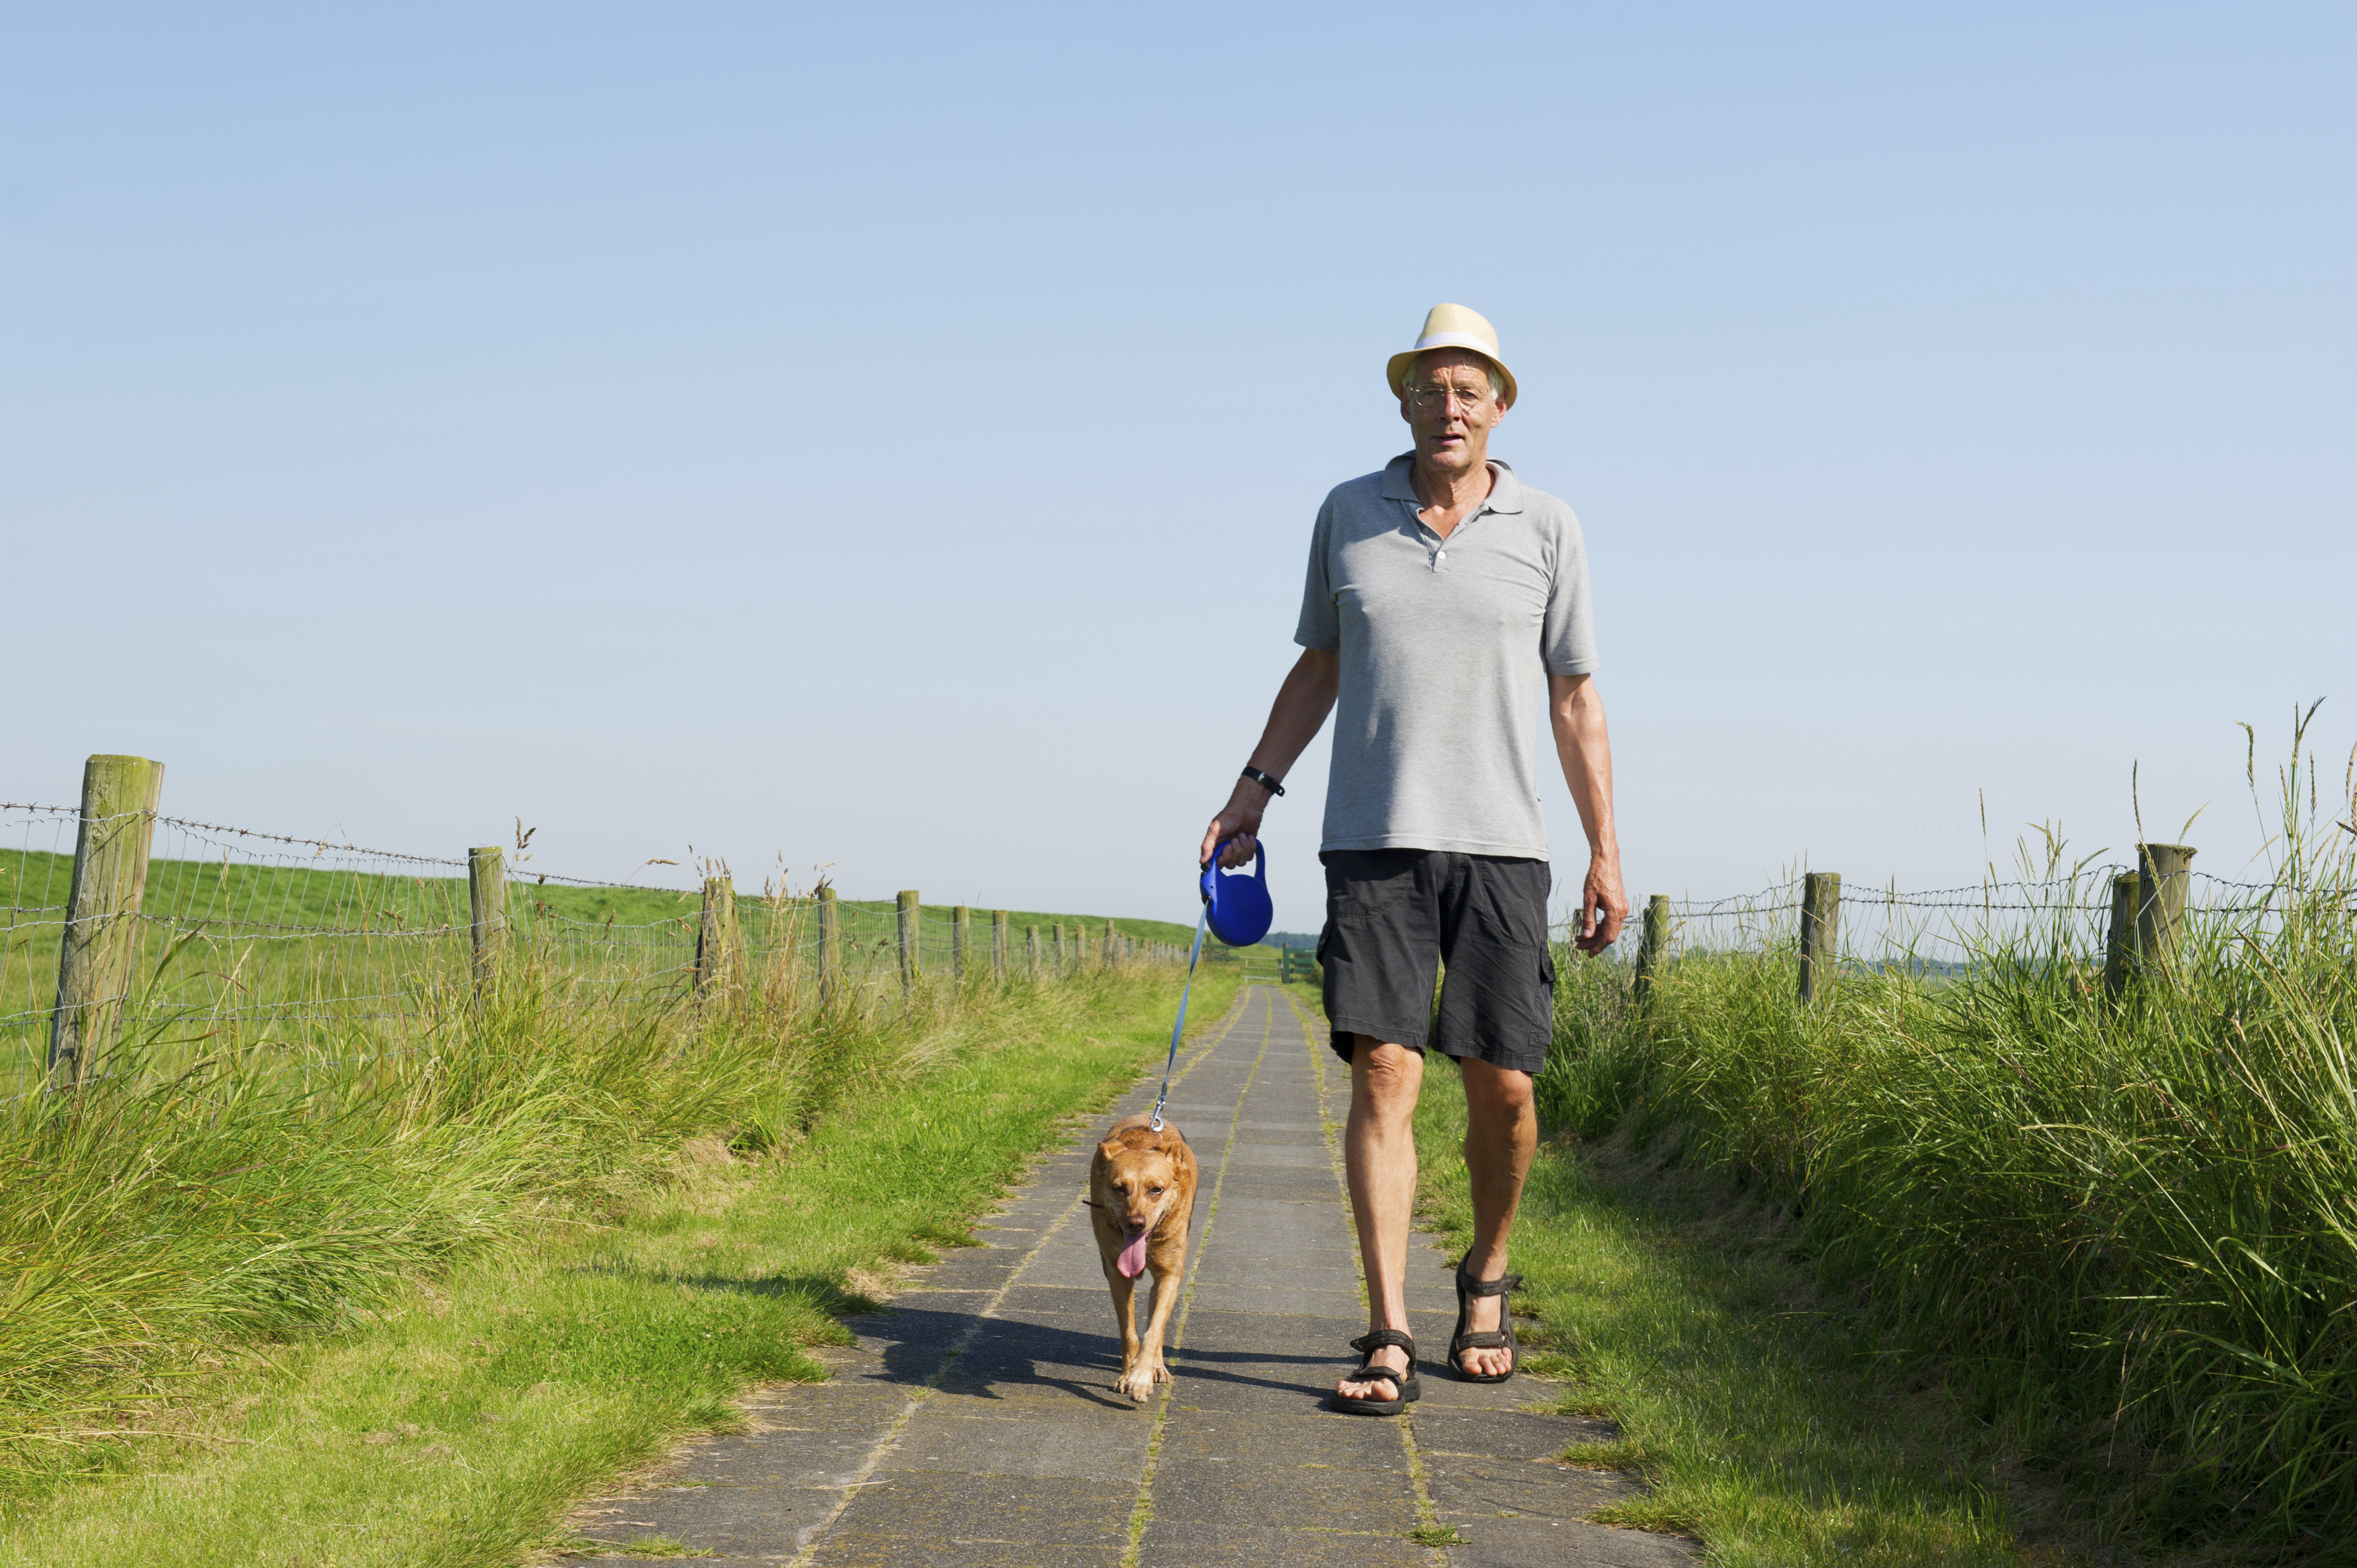 Elderly man with straw hat walking the dog in summer season